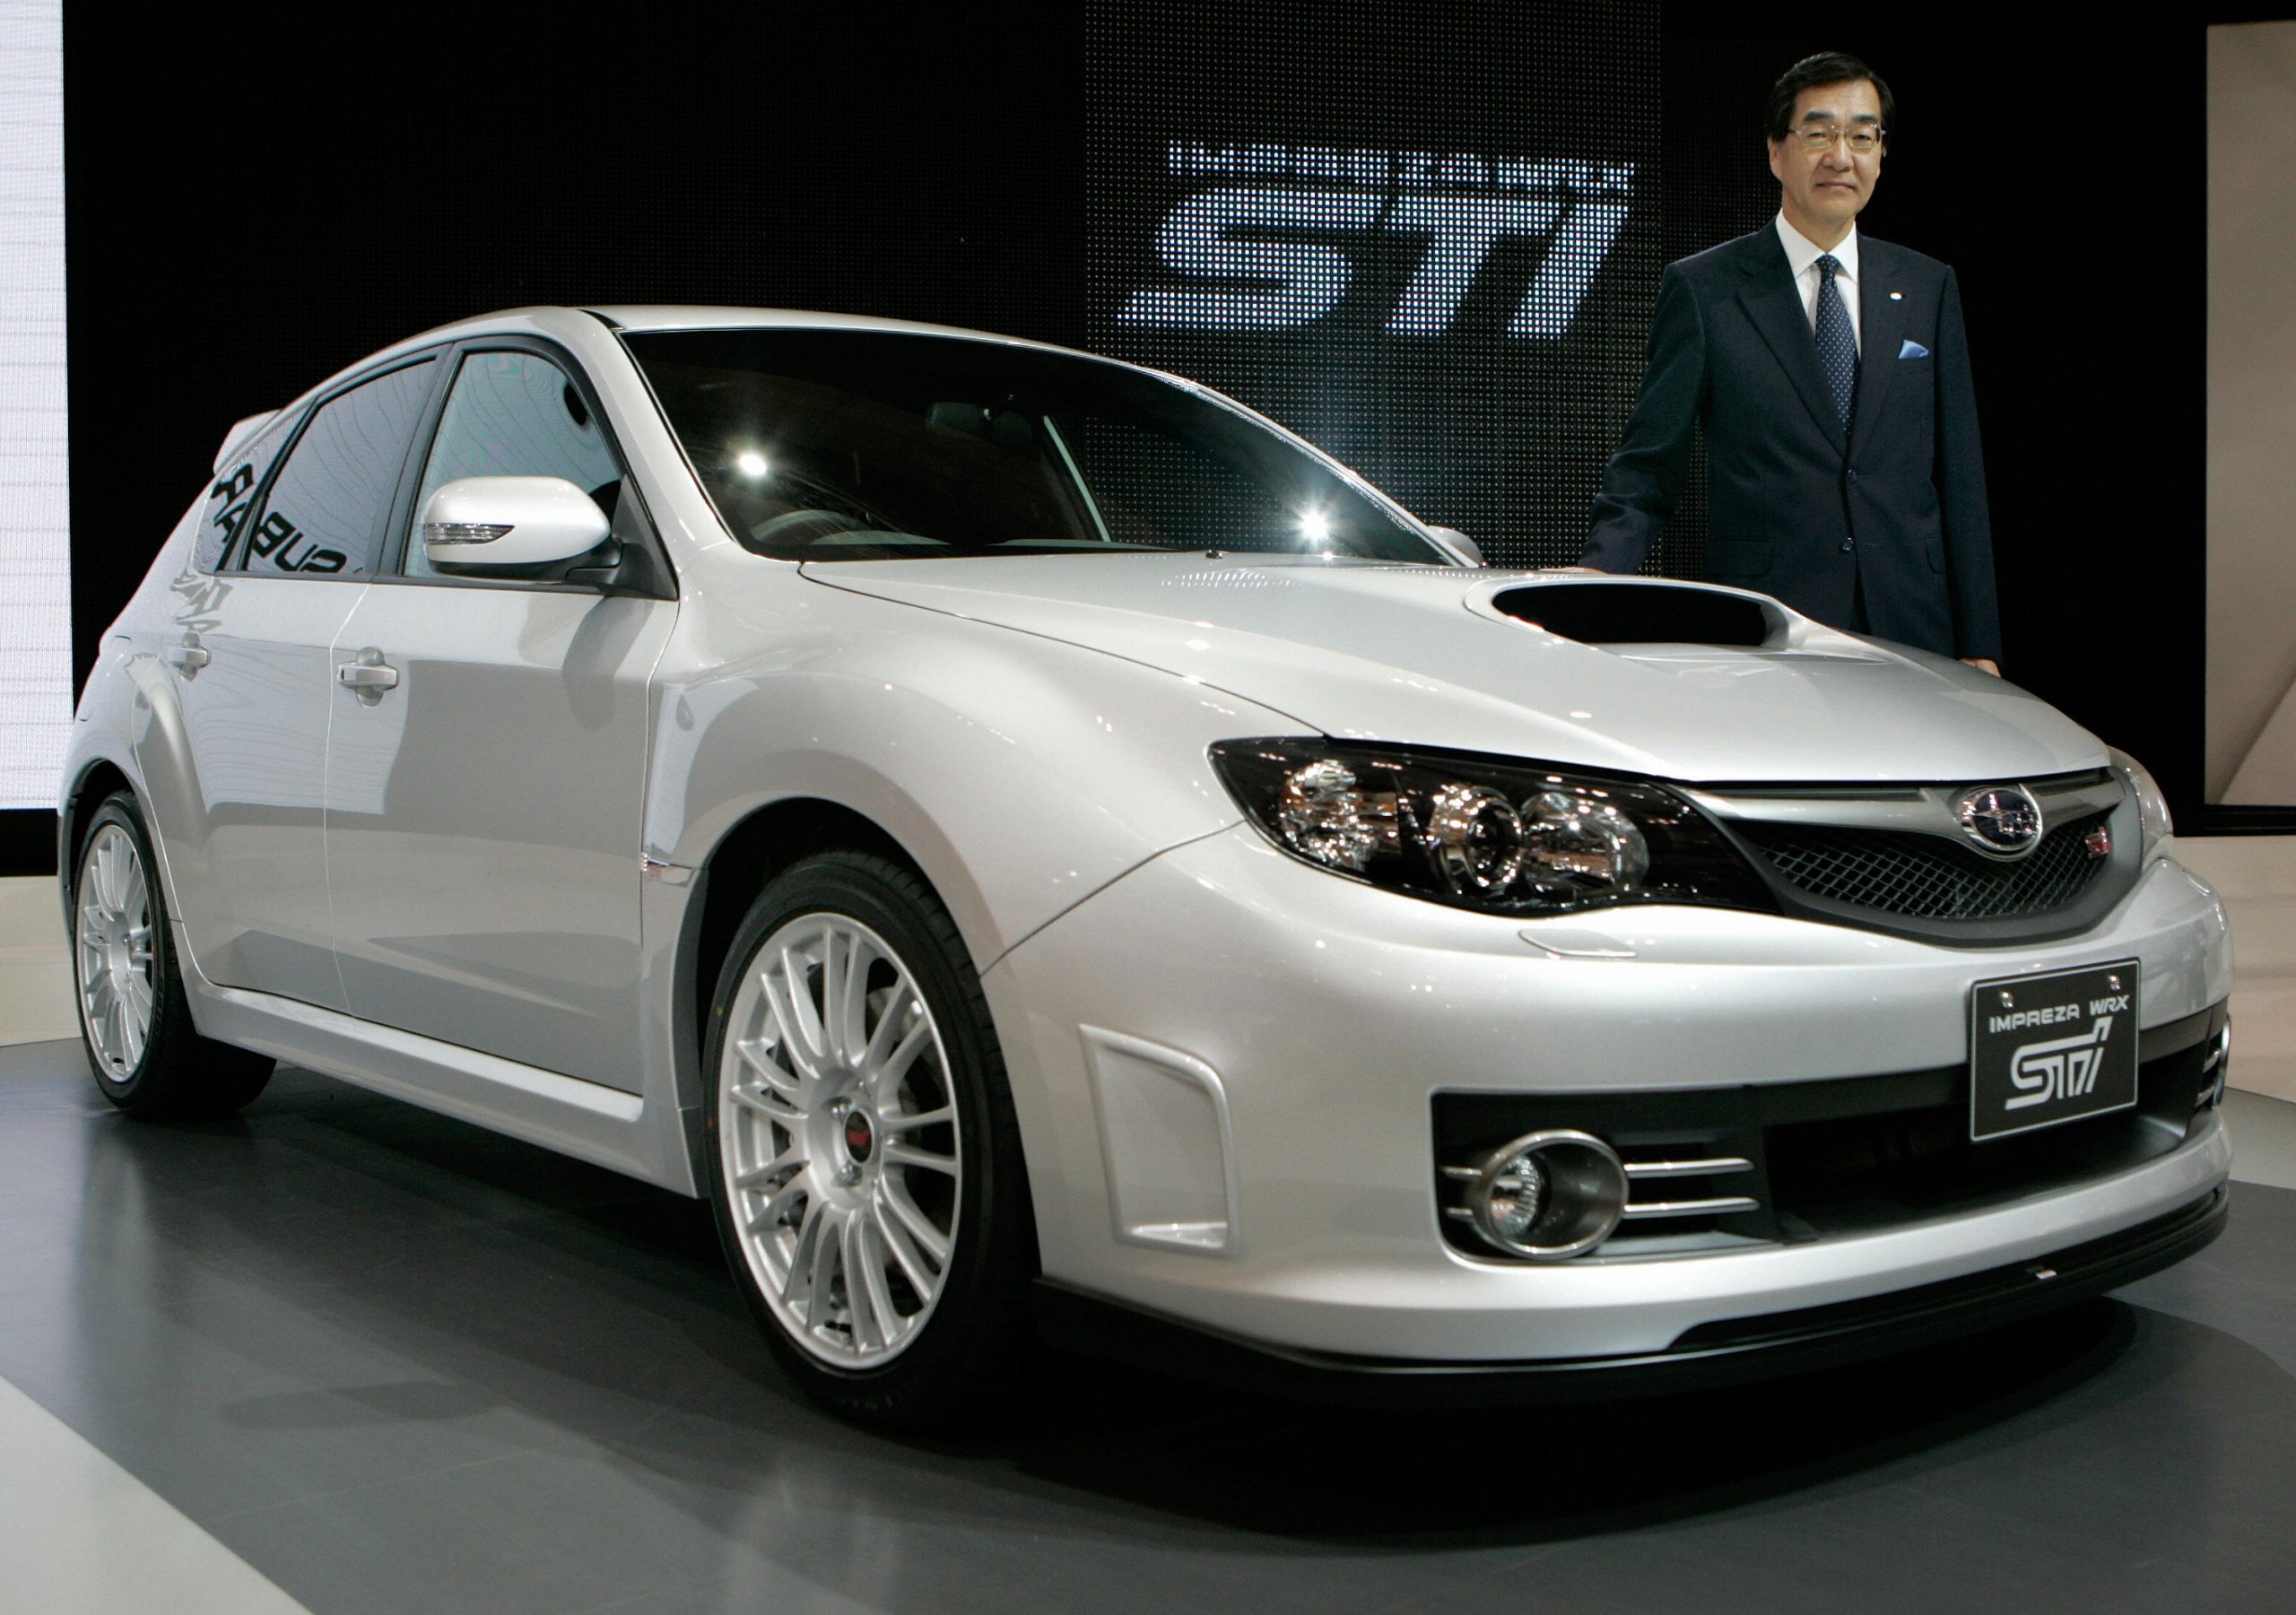 A silver Subaru WRX hatchback on stage accompanied by Ikuo Mori, president of Fuji Heavy Industries